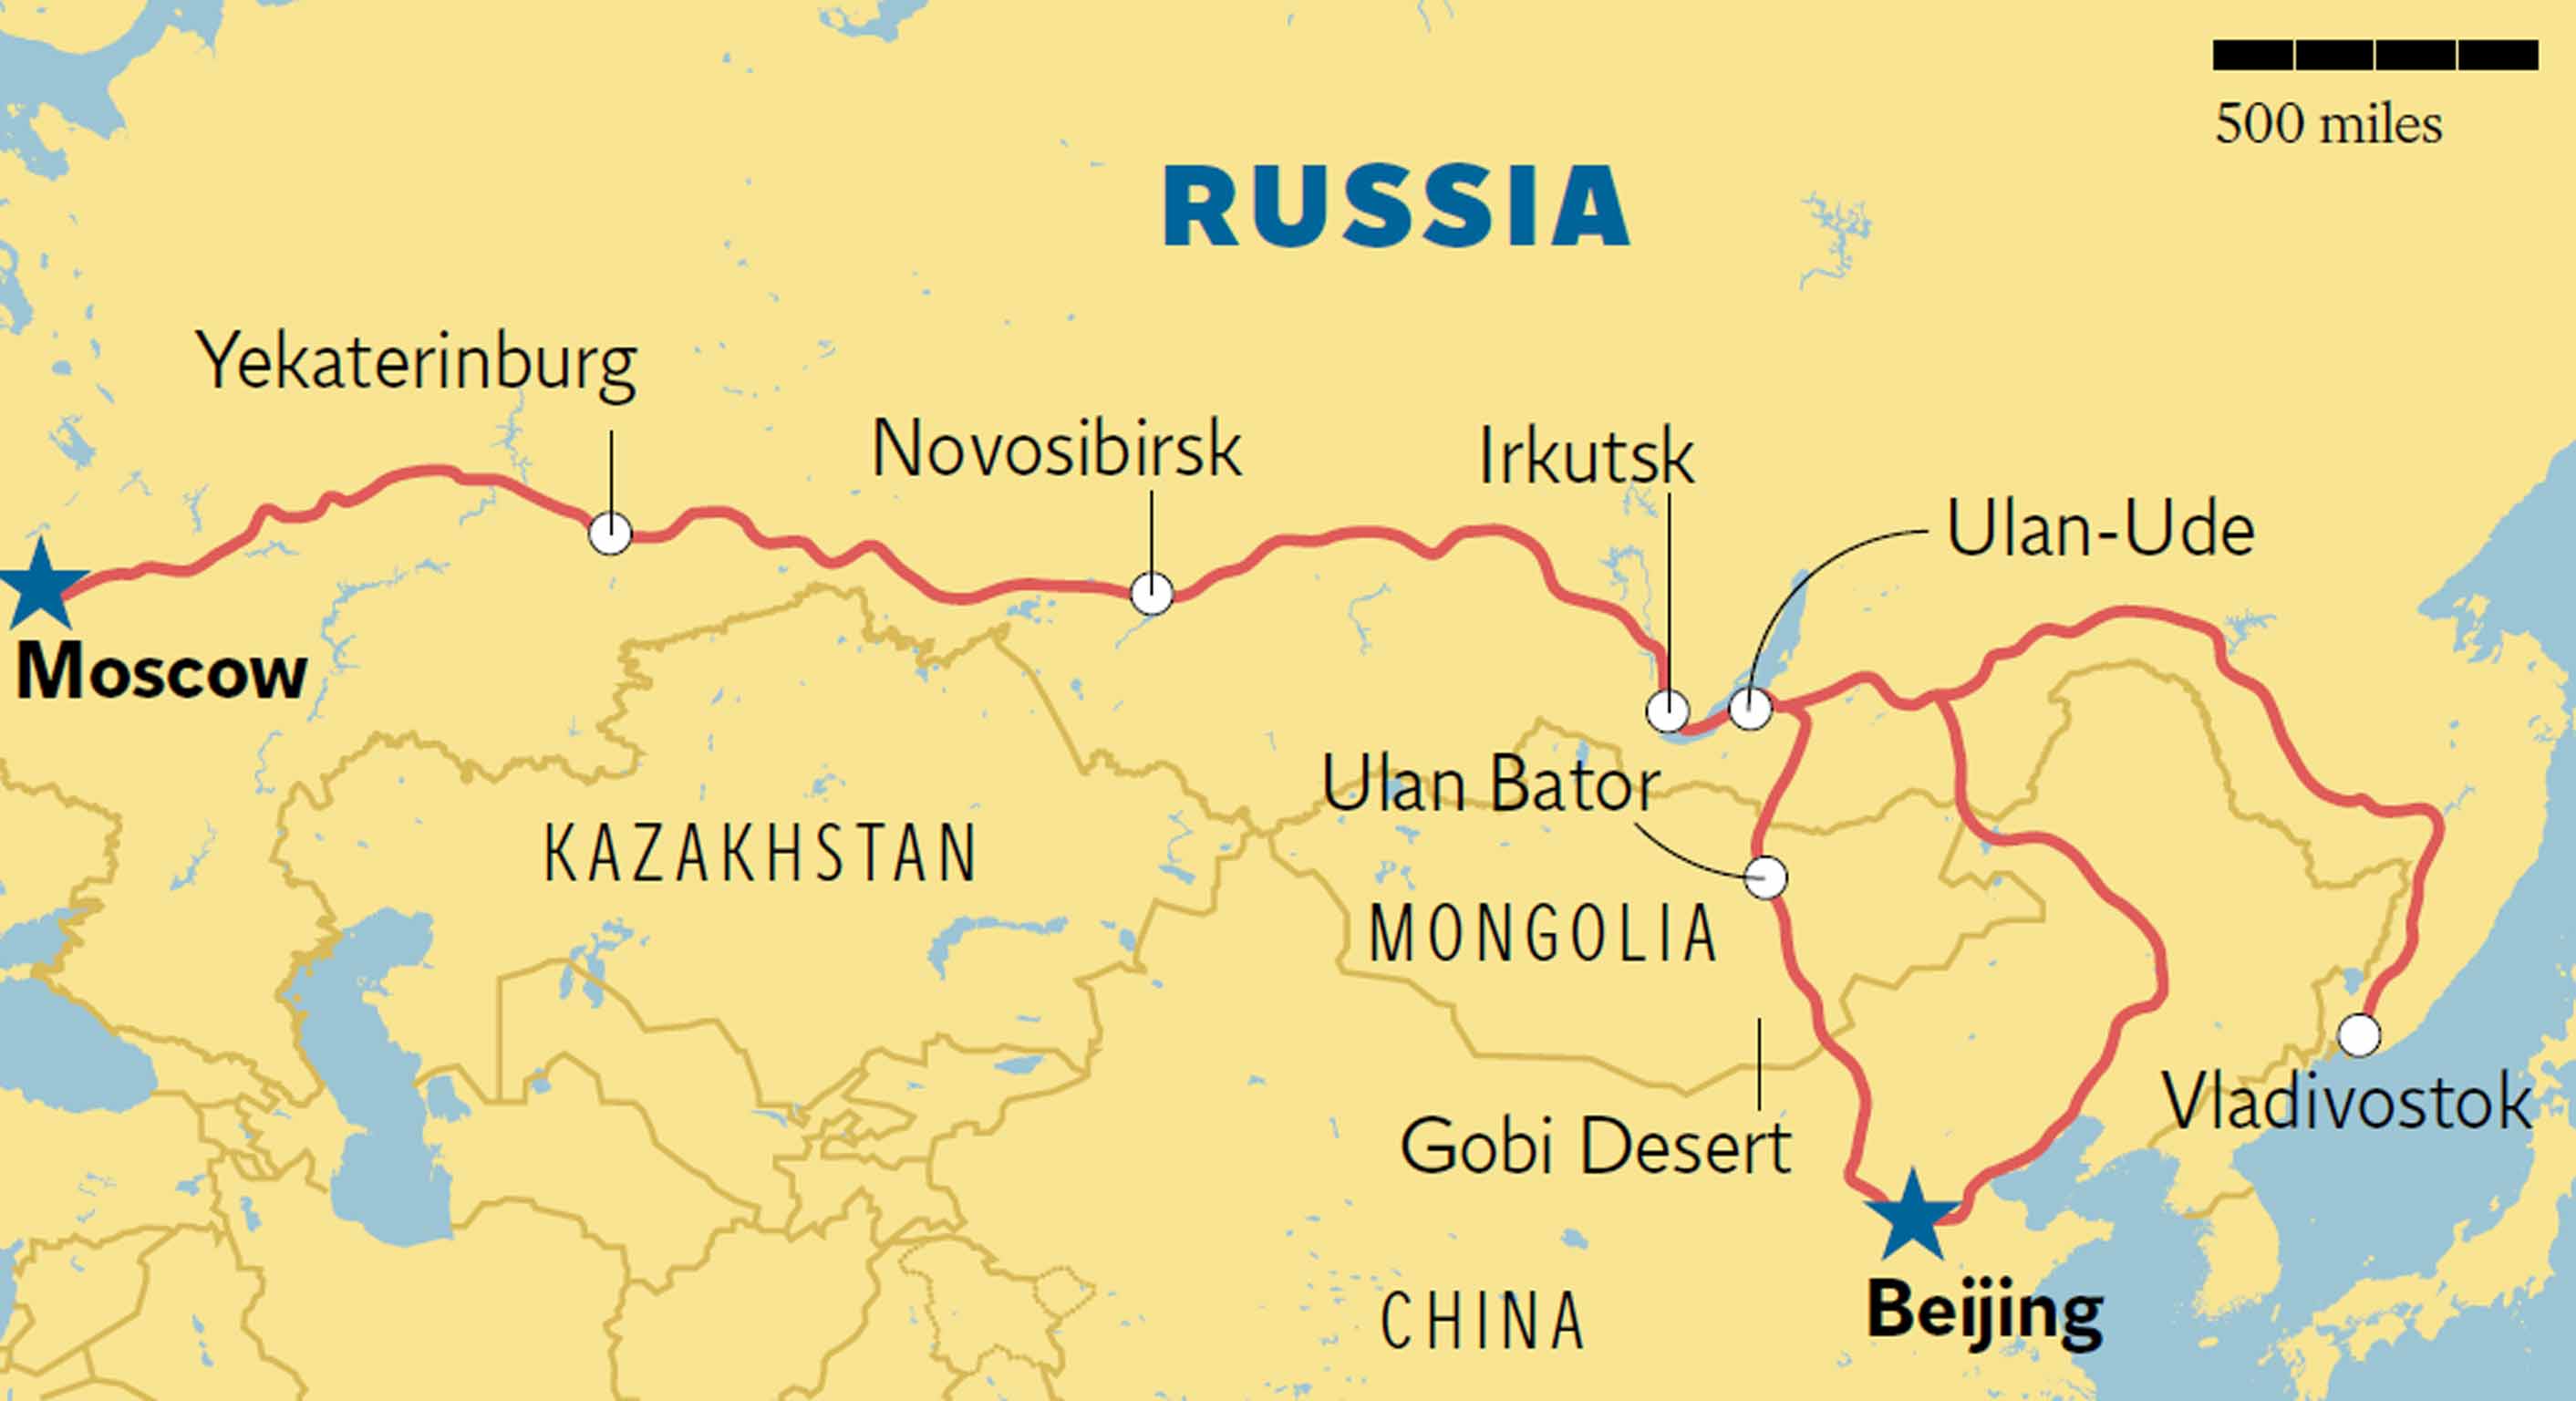 Siberian Railway Map